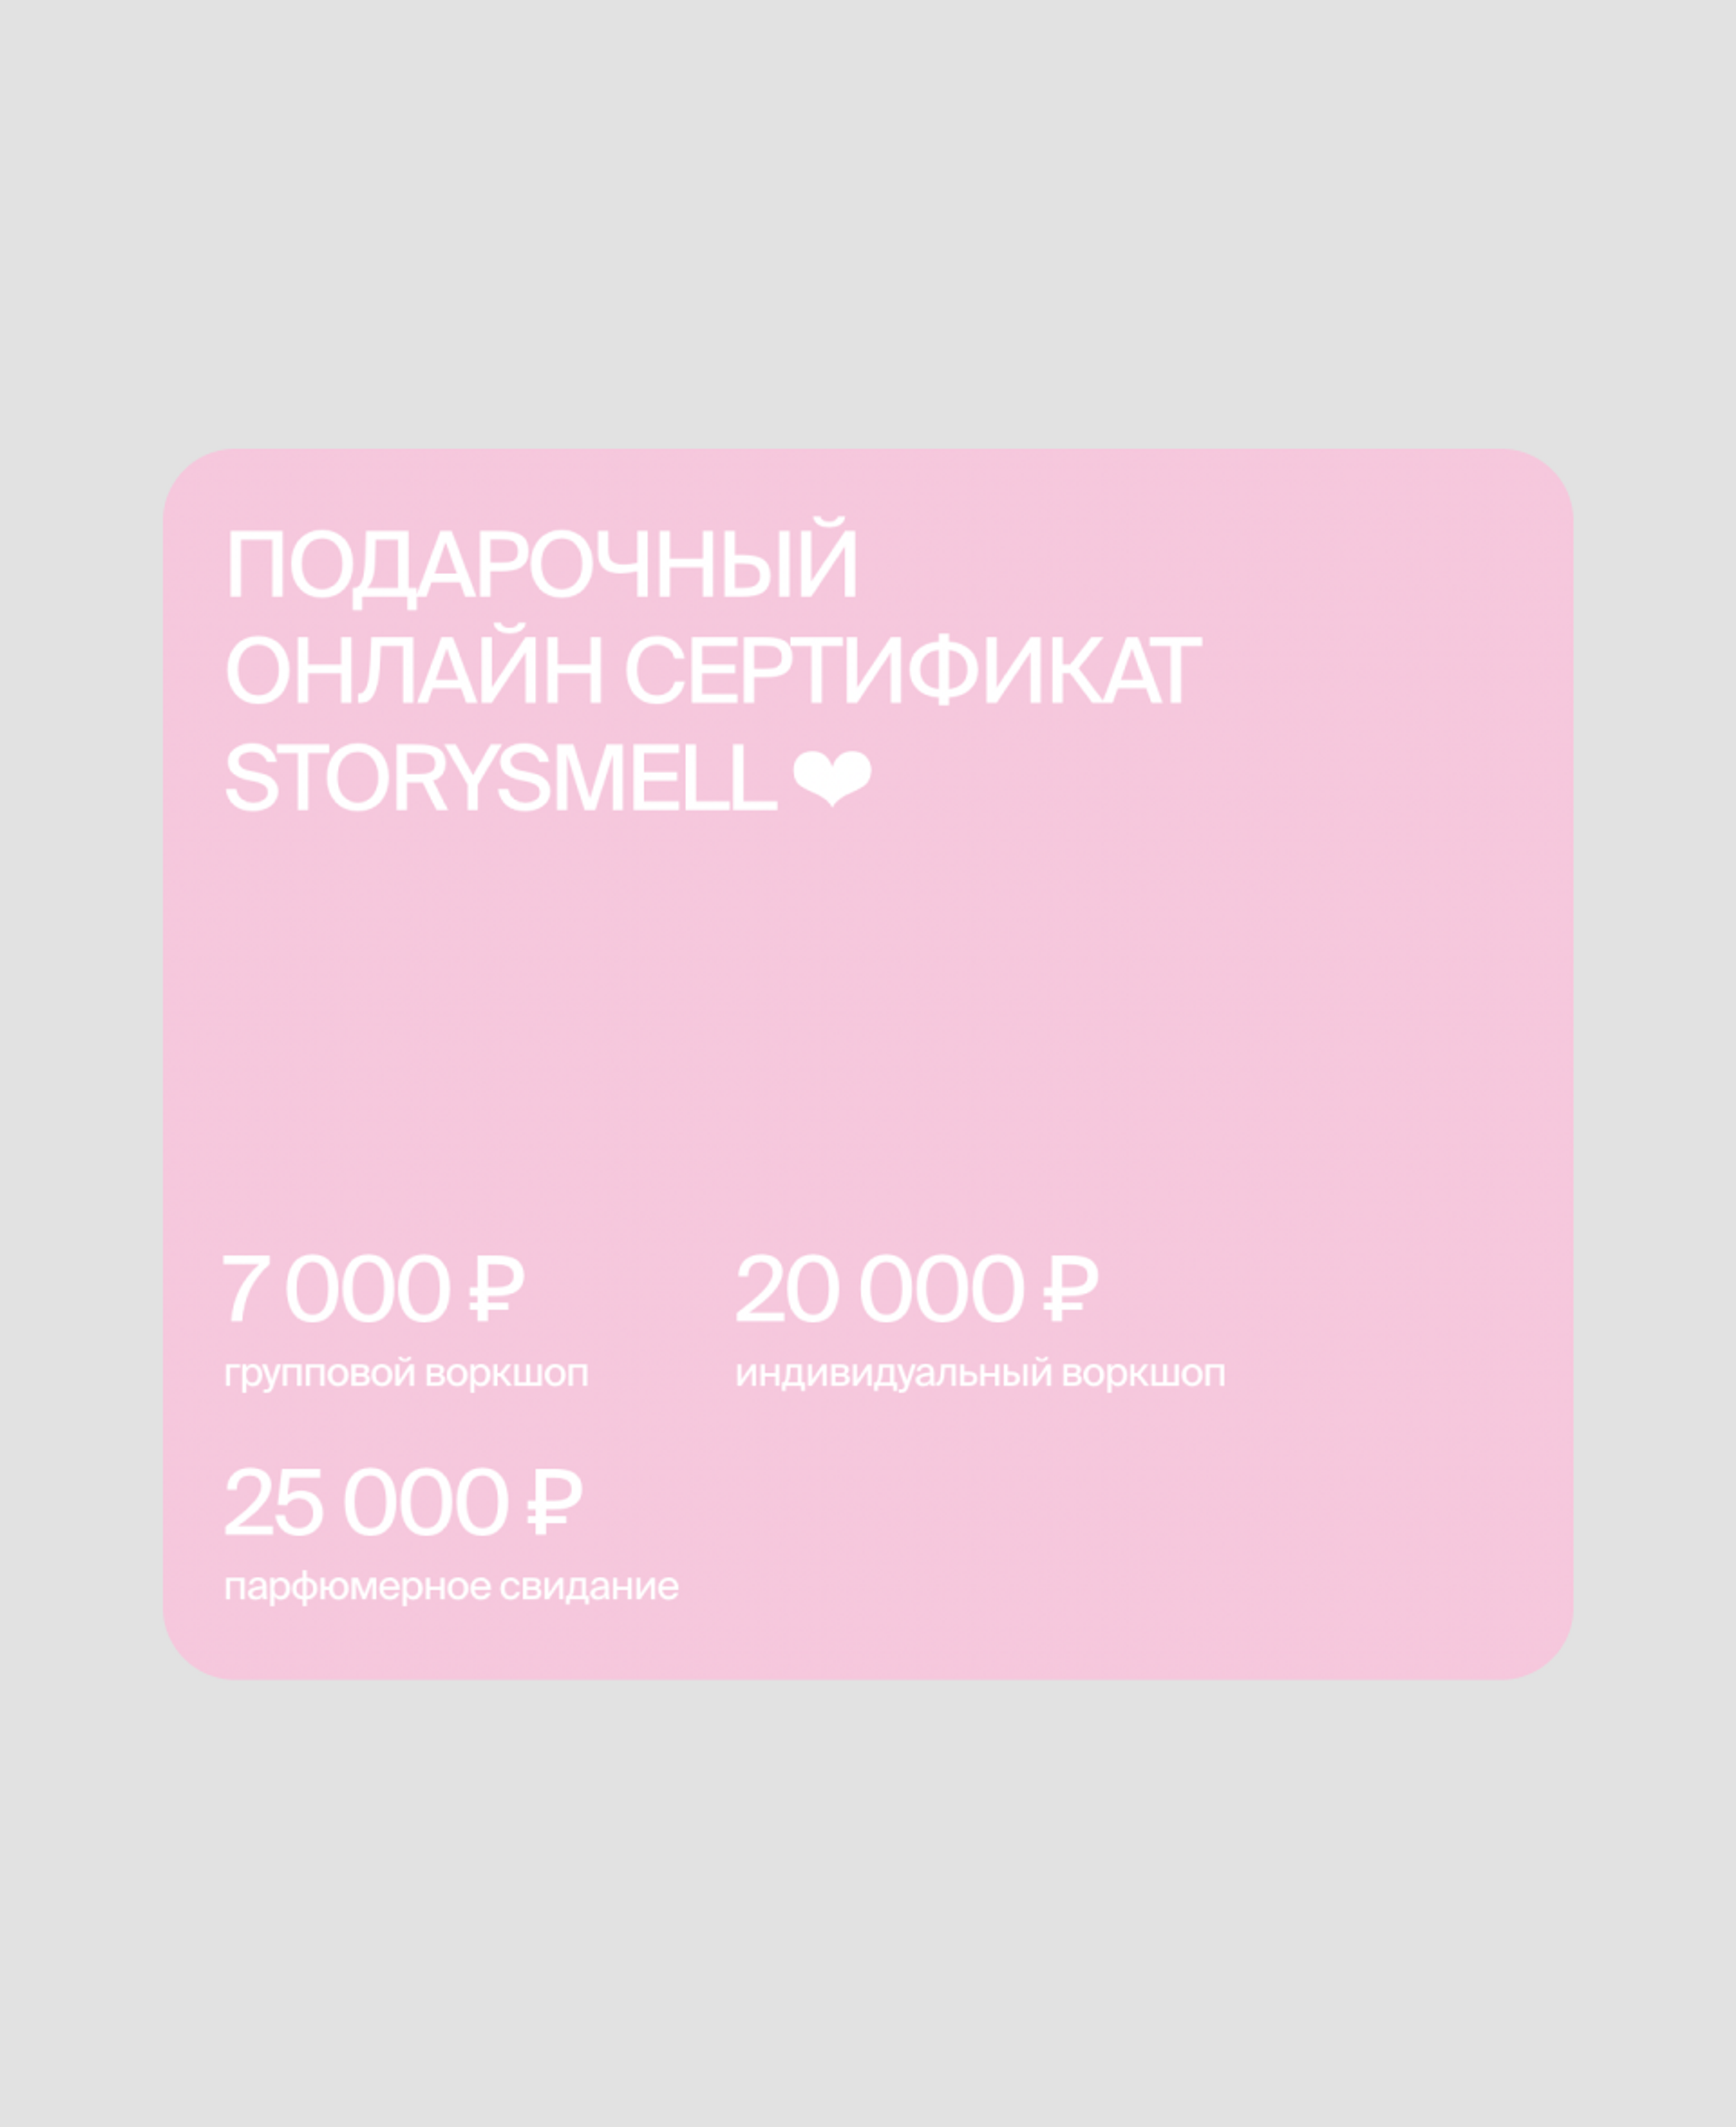 Подарочный онлайн-сертификат Storysmell